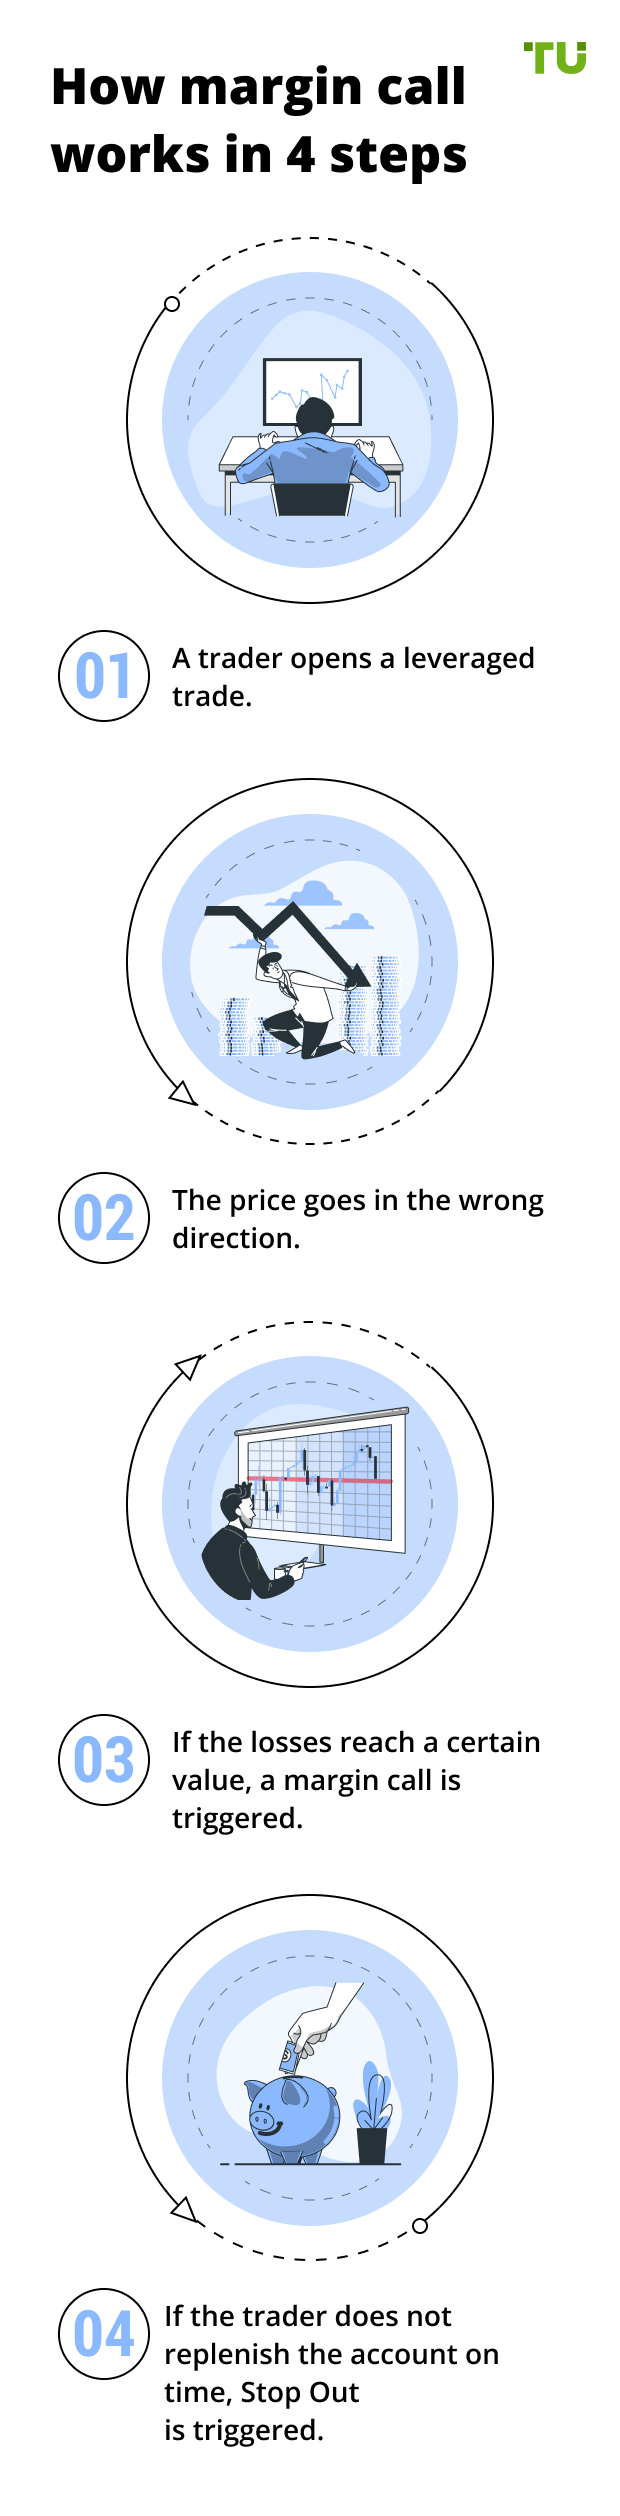 How margin call works in 4 steps